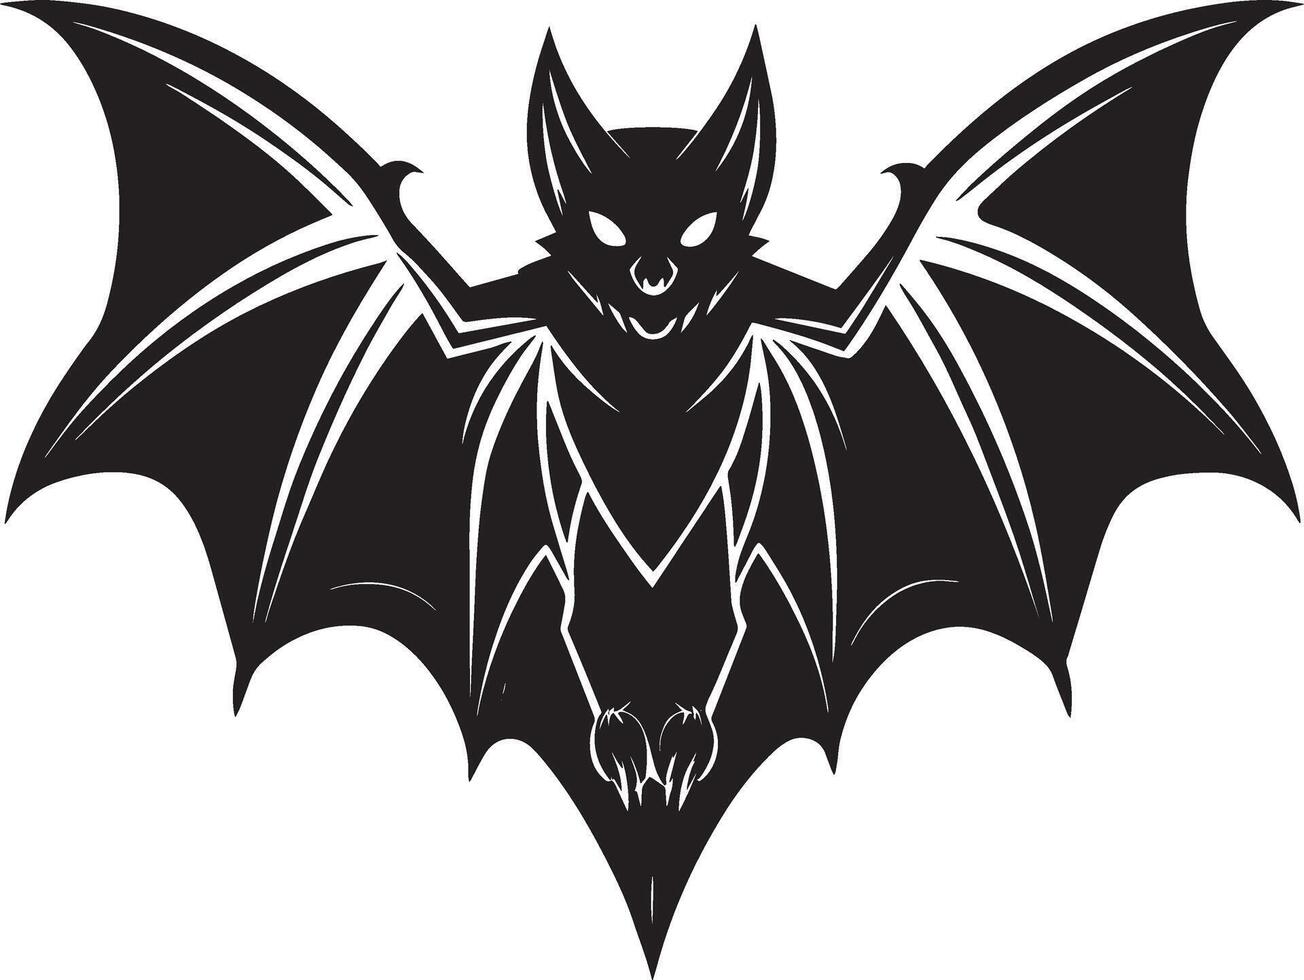 Bat. illustration Isolated on white background. vector